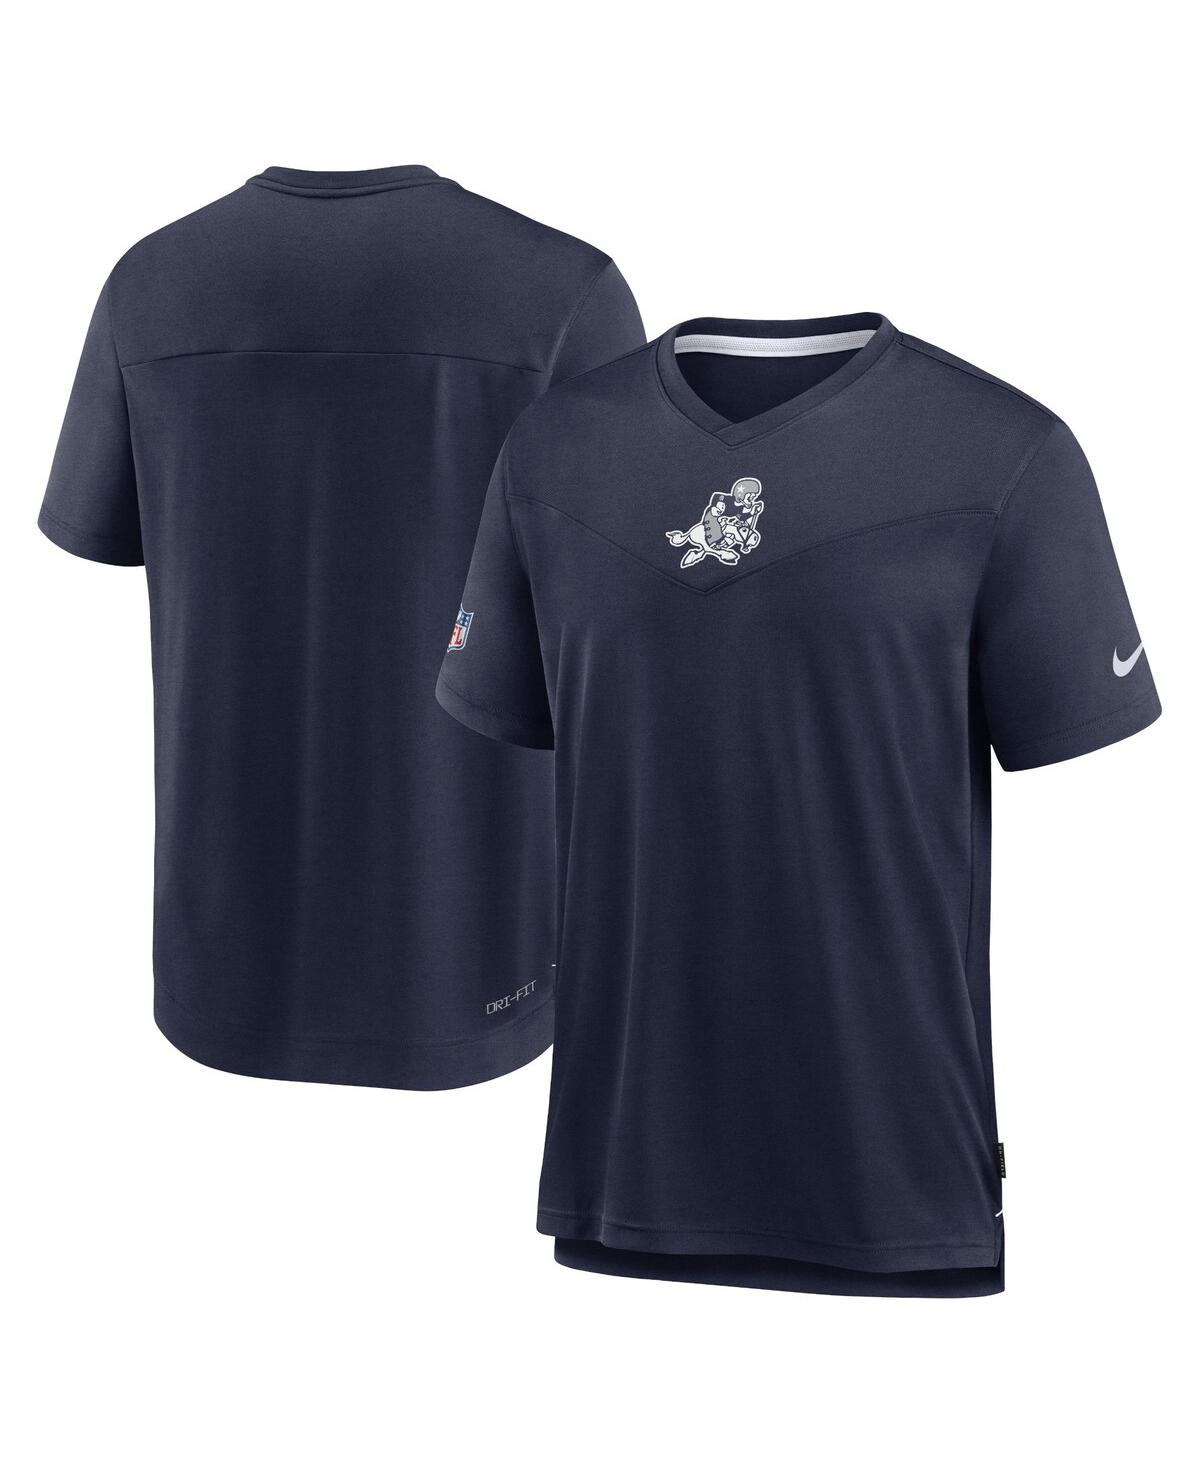 Men's Nike Navy Dallas Cowboys Sideline Coaches Vintage-like Chevron Performance V-neck T-shirt